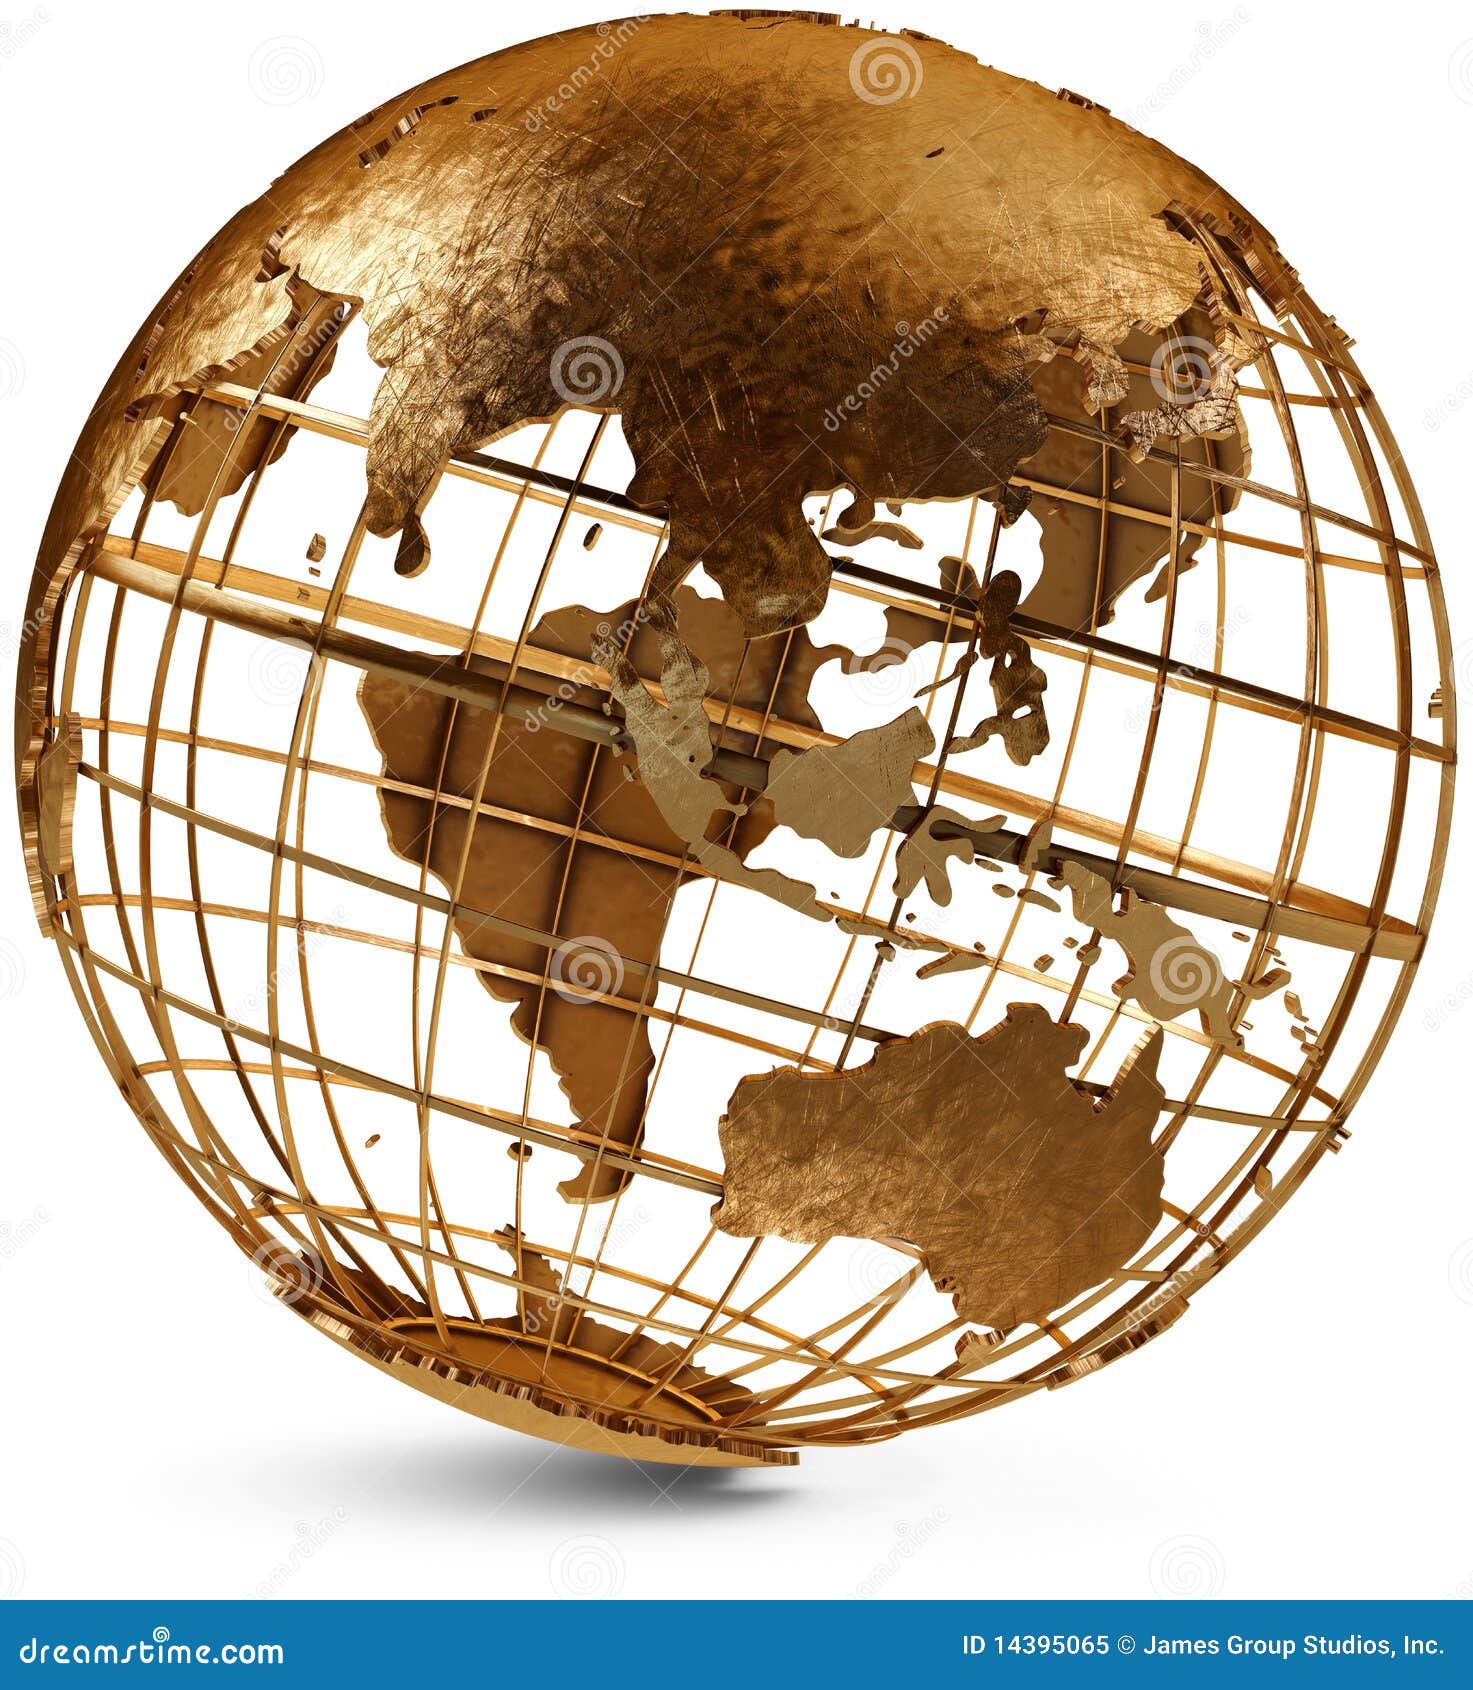 eastern hemisphere globe